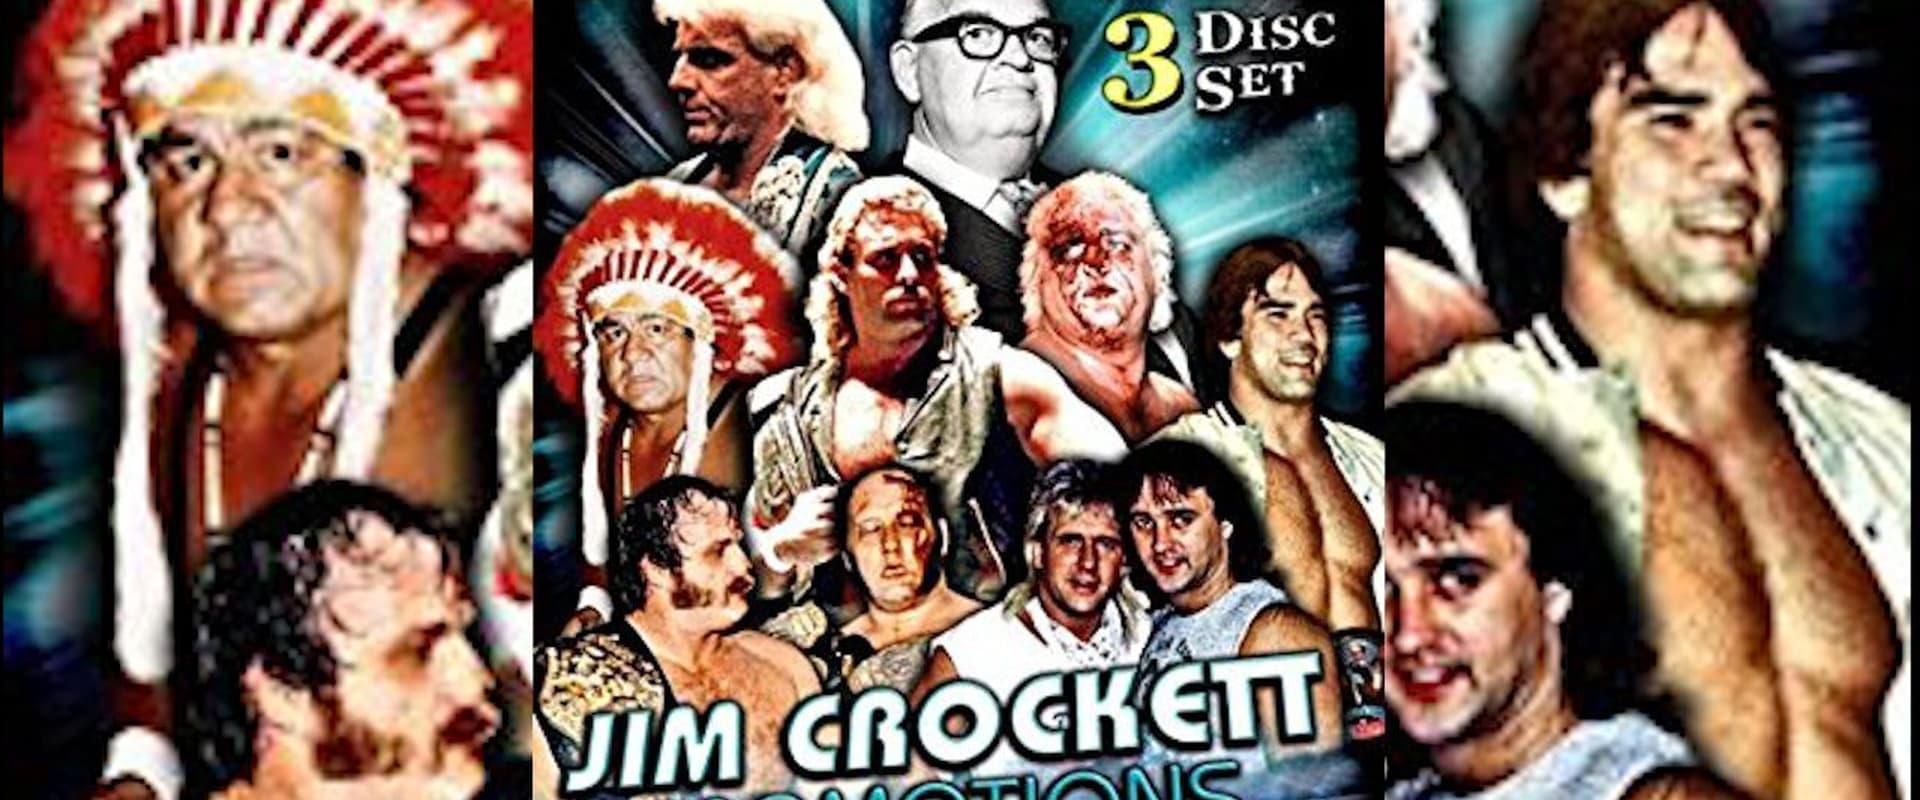 Jim Crockett Promotions: The Good Old Days